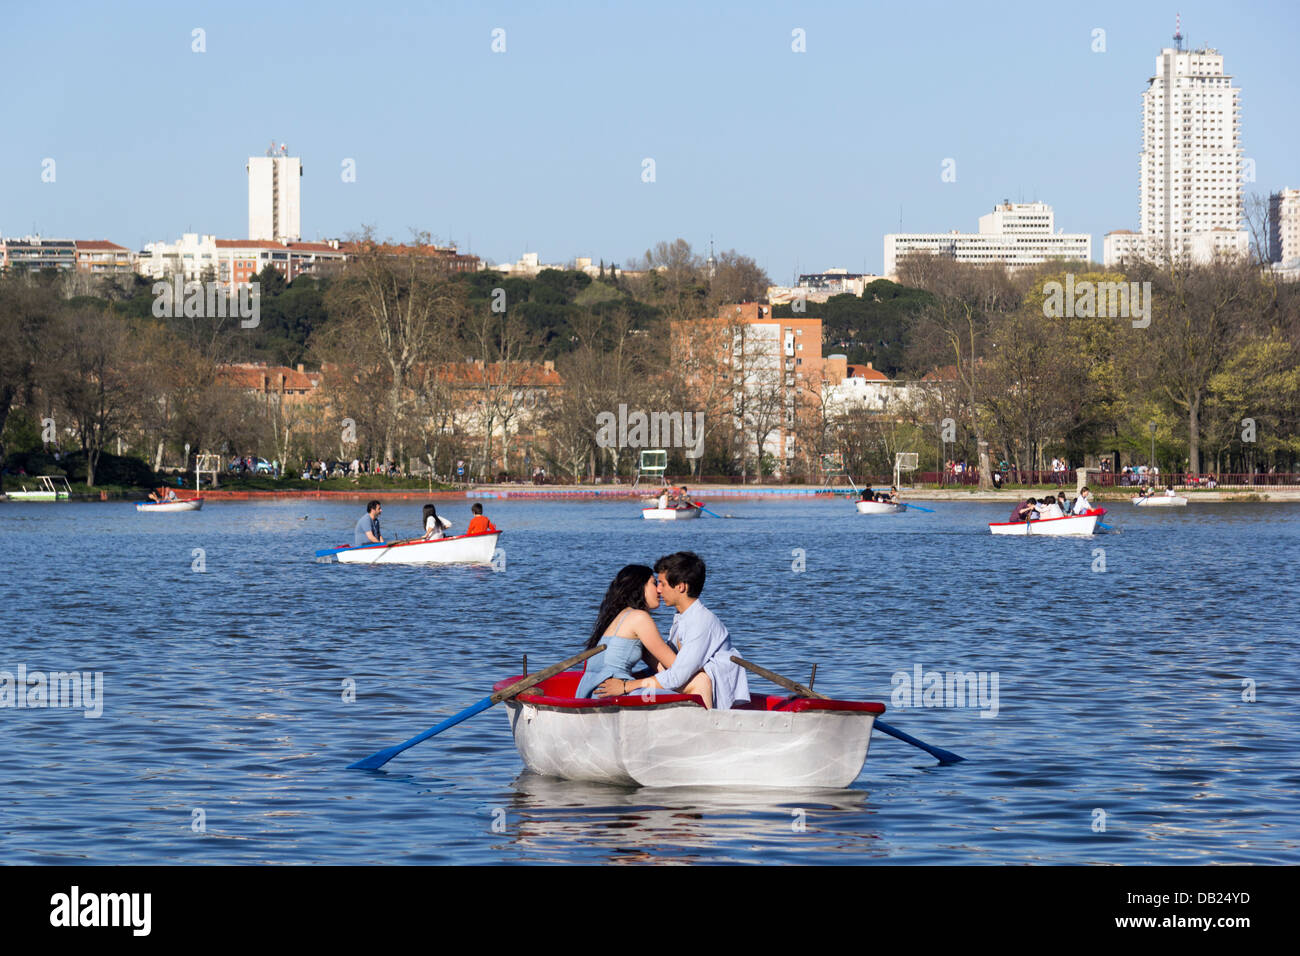 A boating lake in Casa de Campo, Madrid, Spain. Stock Photo